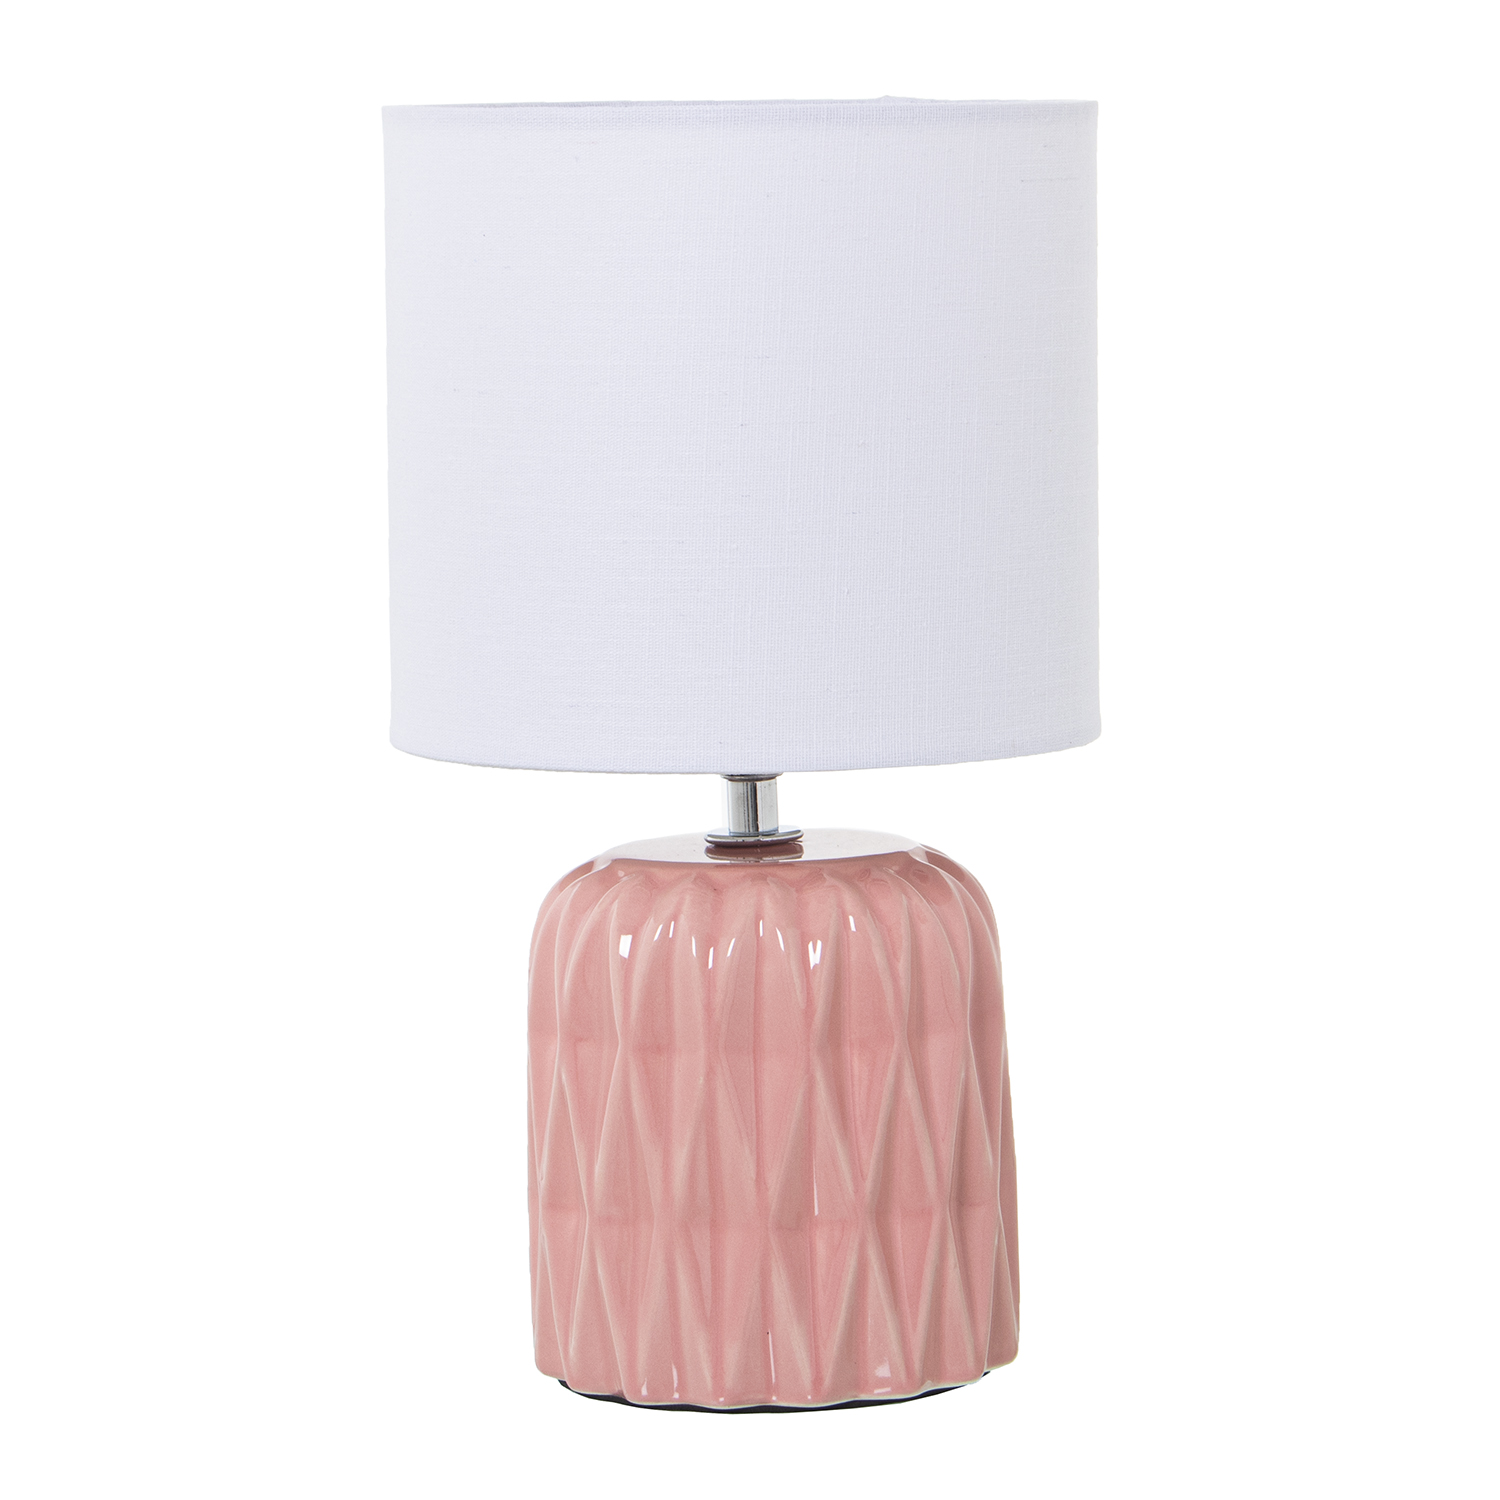 34060-lampara-ceramica-rosa.gif